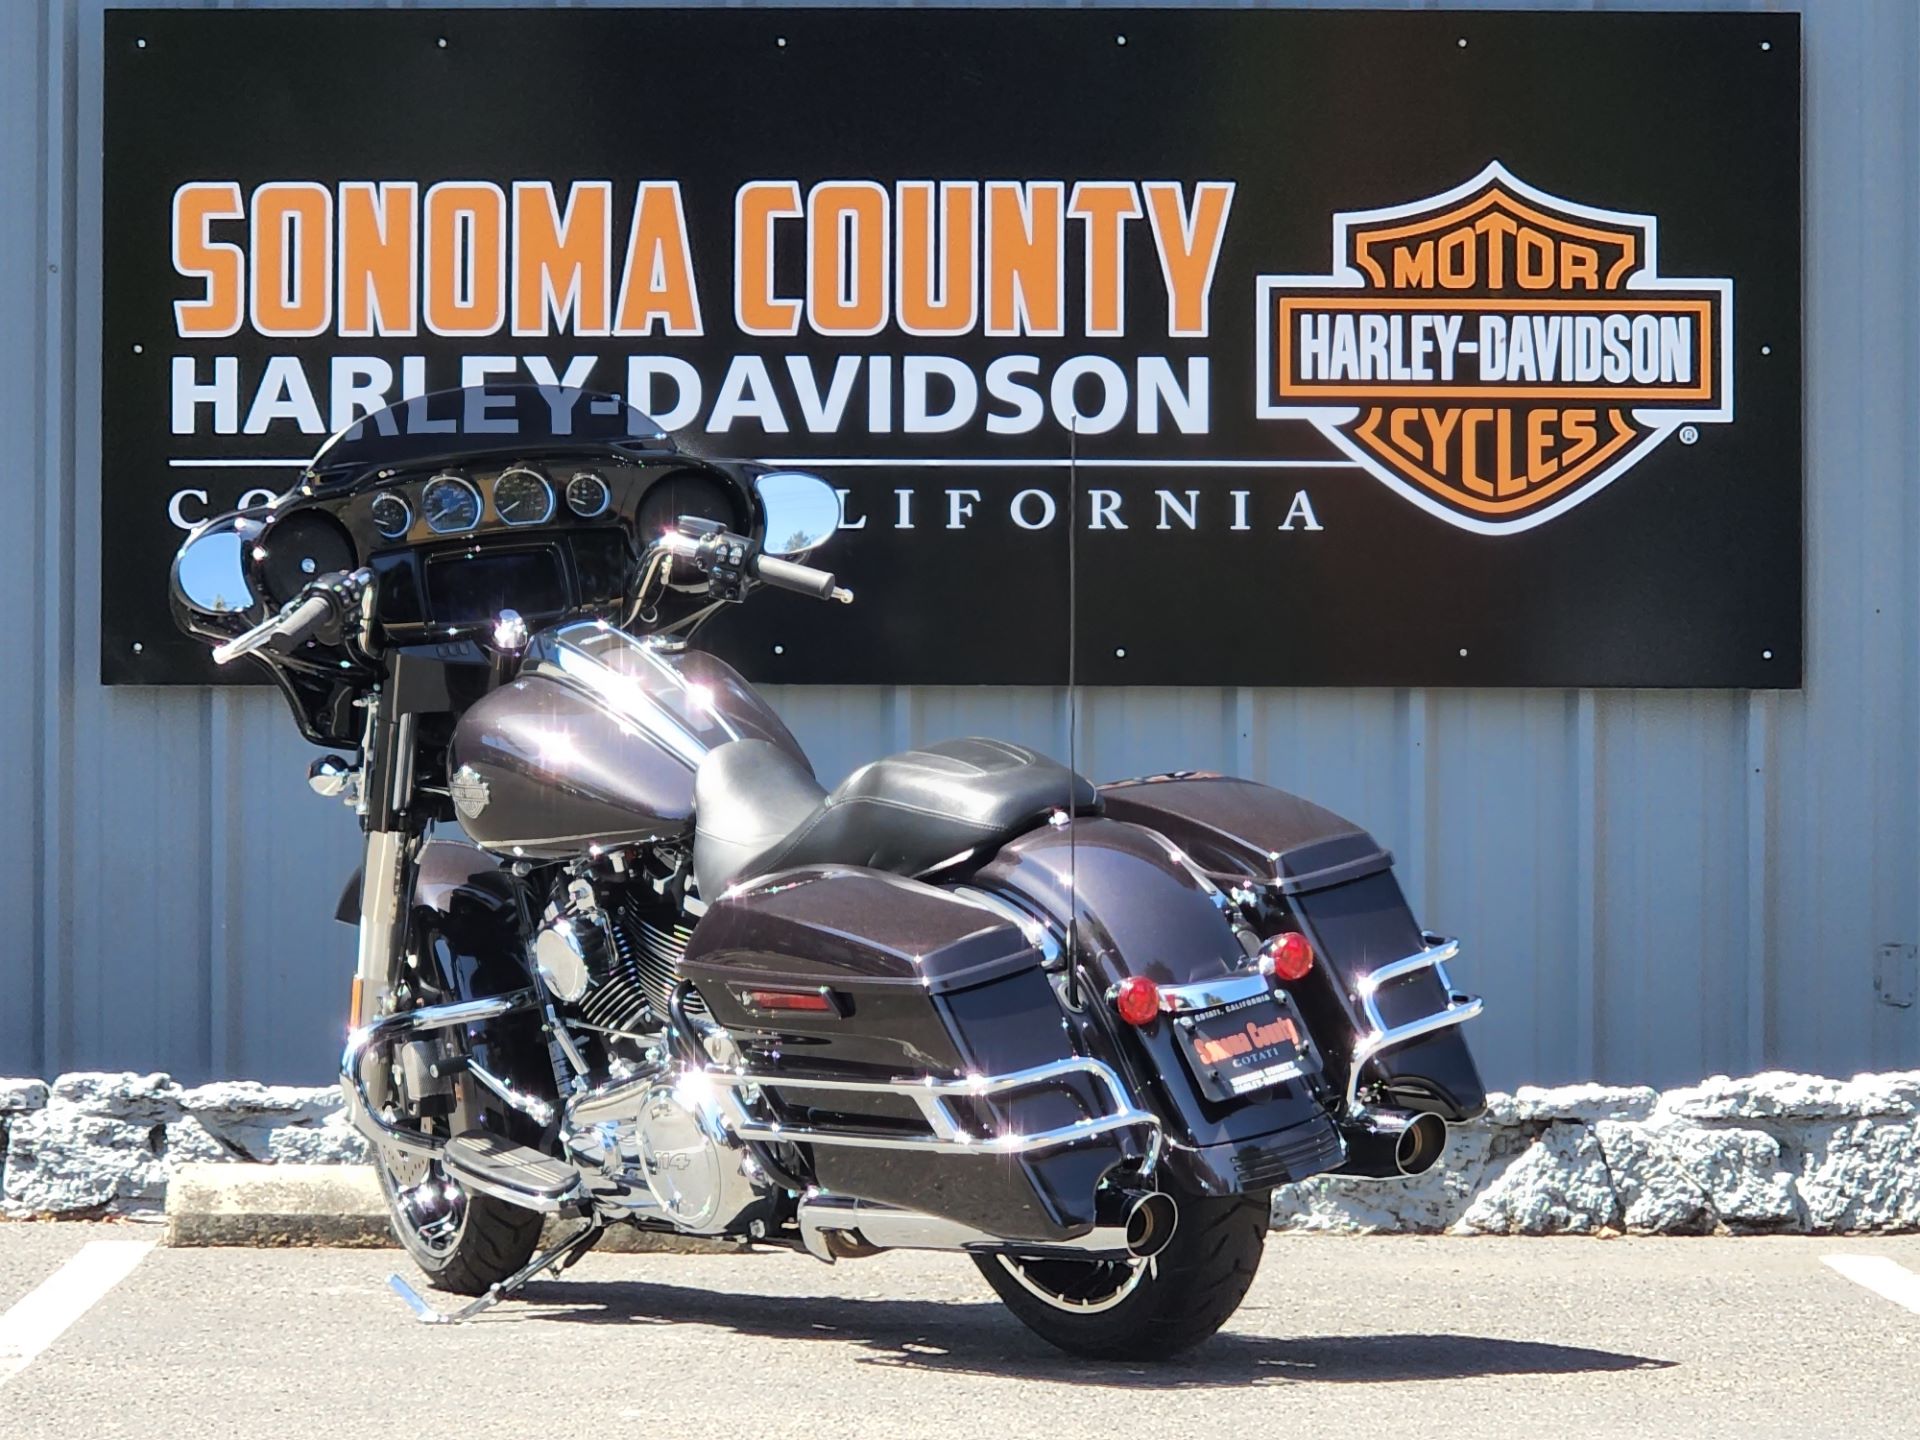 2021 Harley-Davidson Street Glide® Special in Cotati, California - Photo 4